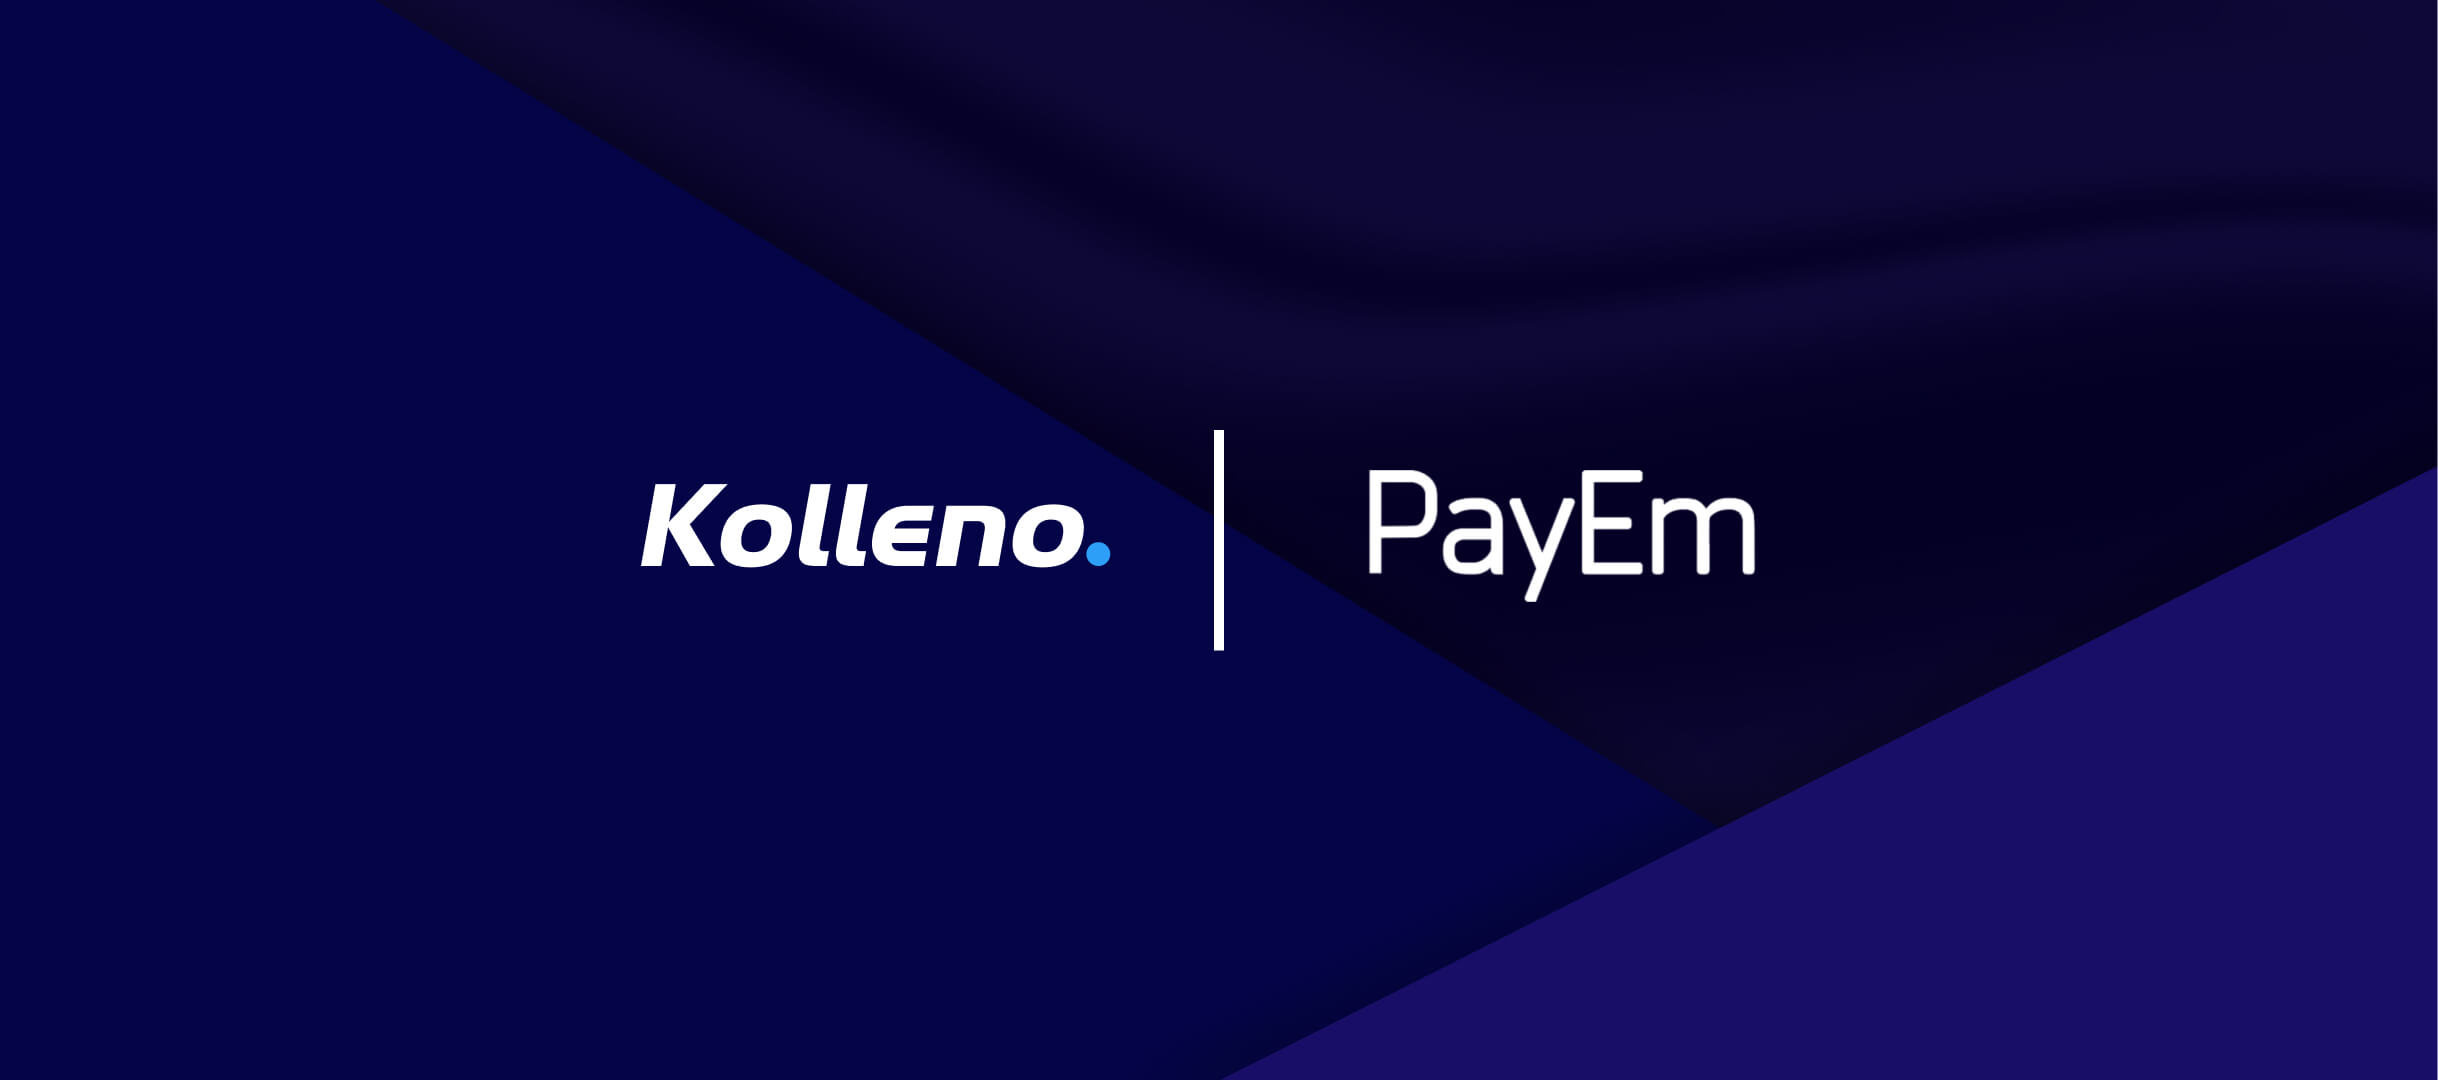 Partnership with PayEm, leading spend management platform